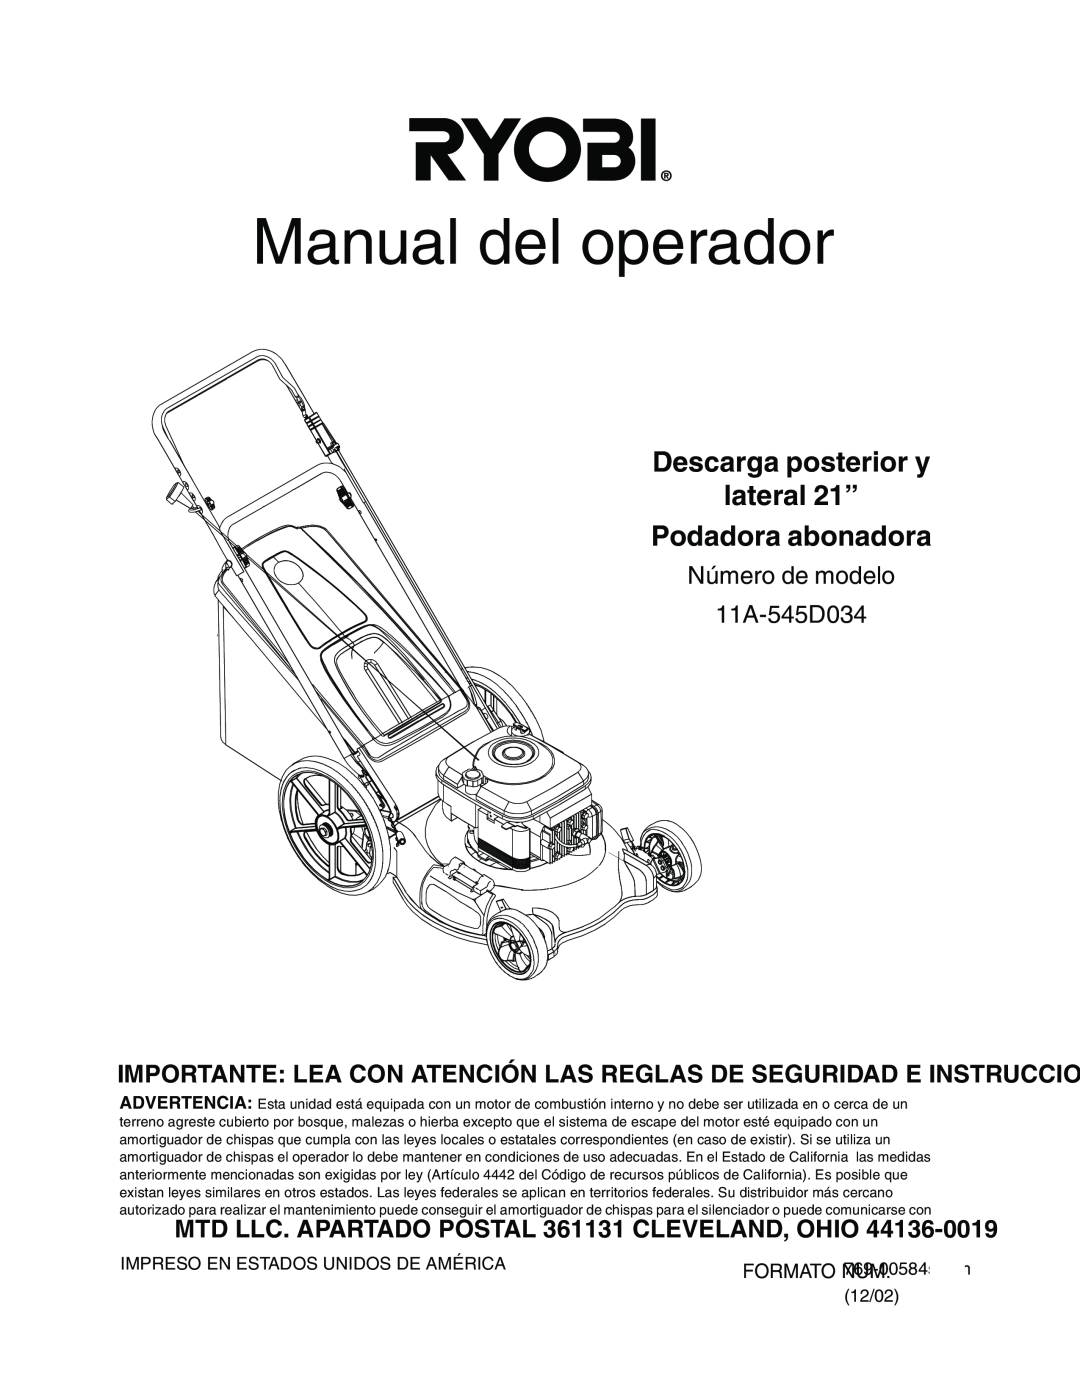 MTD Manual del operador, Descarga posterior y lateral 21” Podadora abonadora, Número de modelo 11A-545D034, Formato Num 